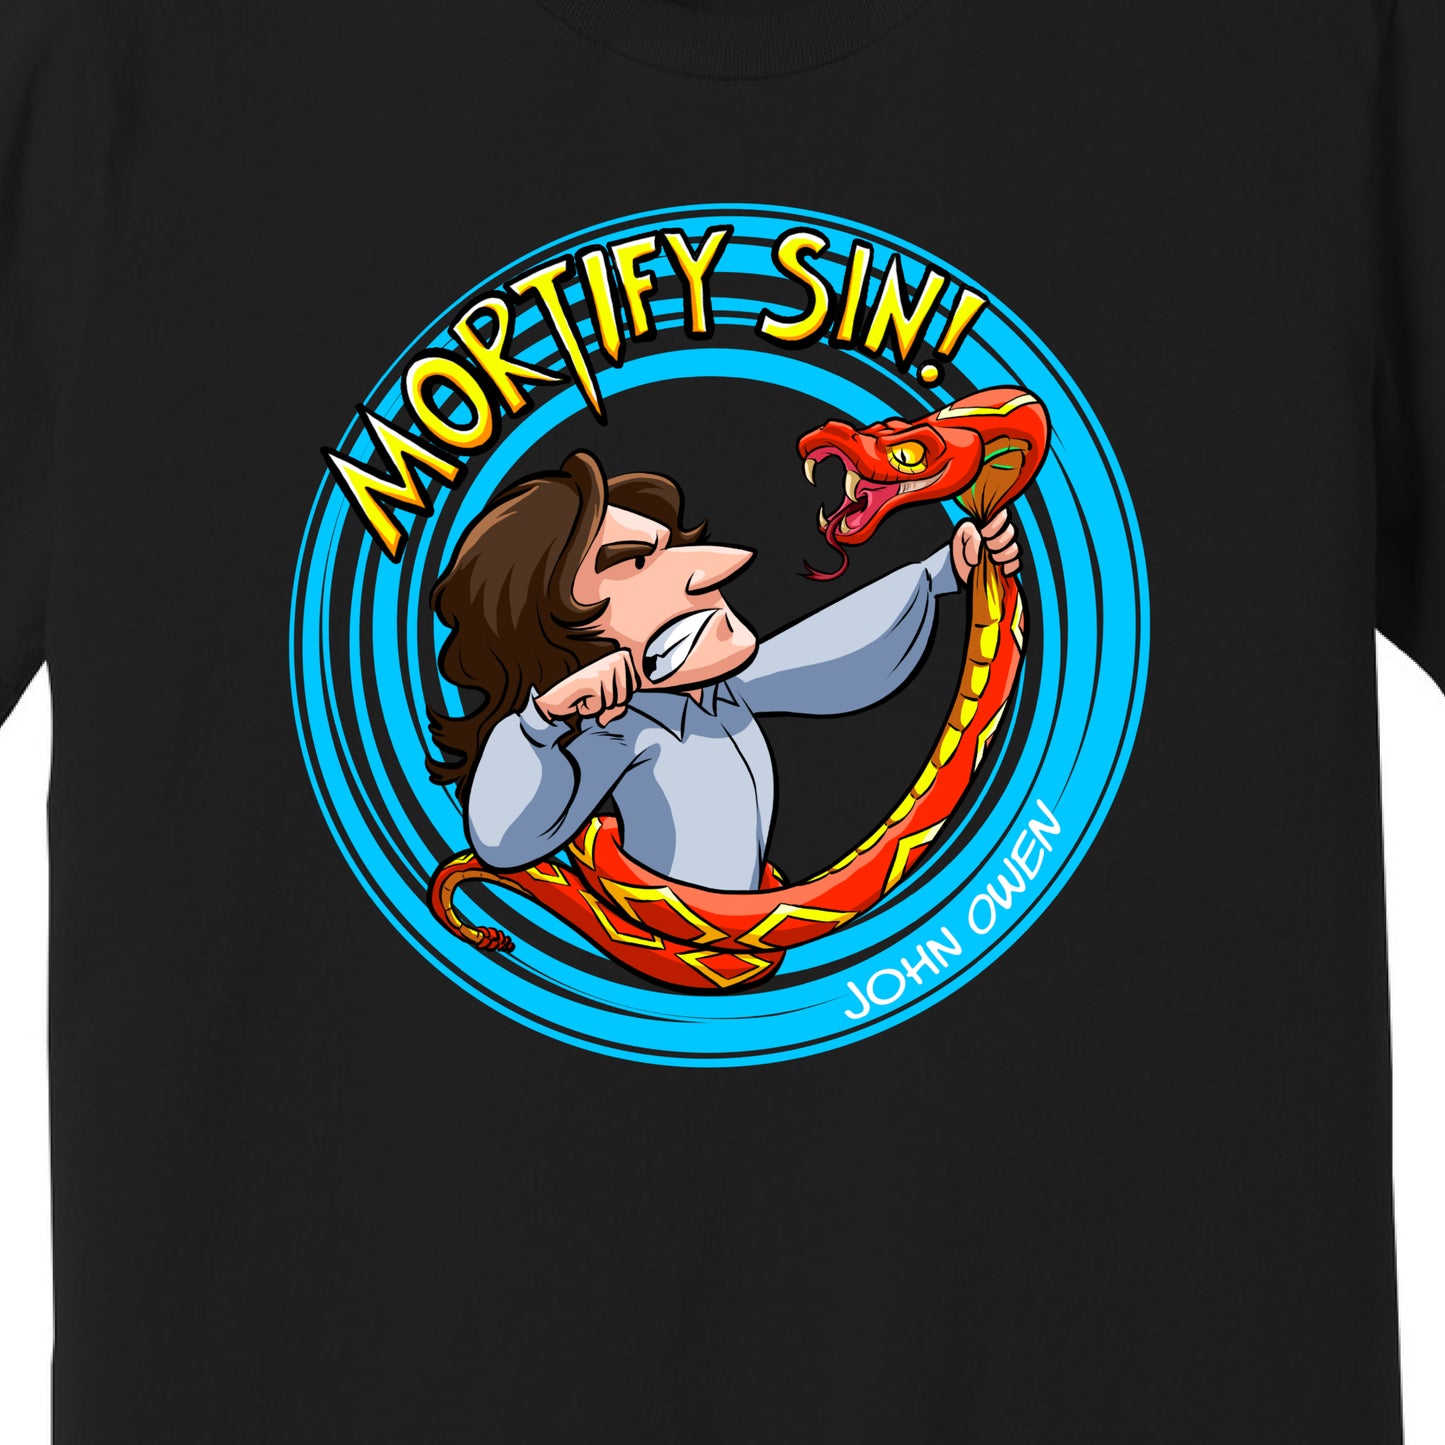 T-Shirt: Mortify Sin: Snake